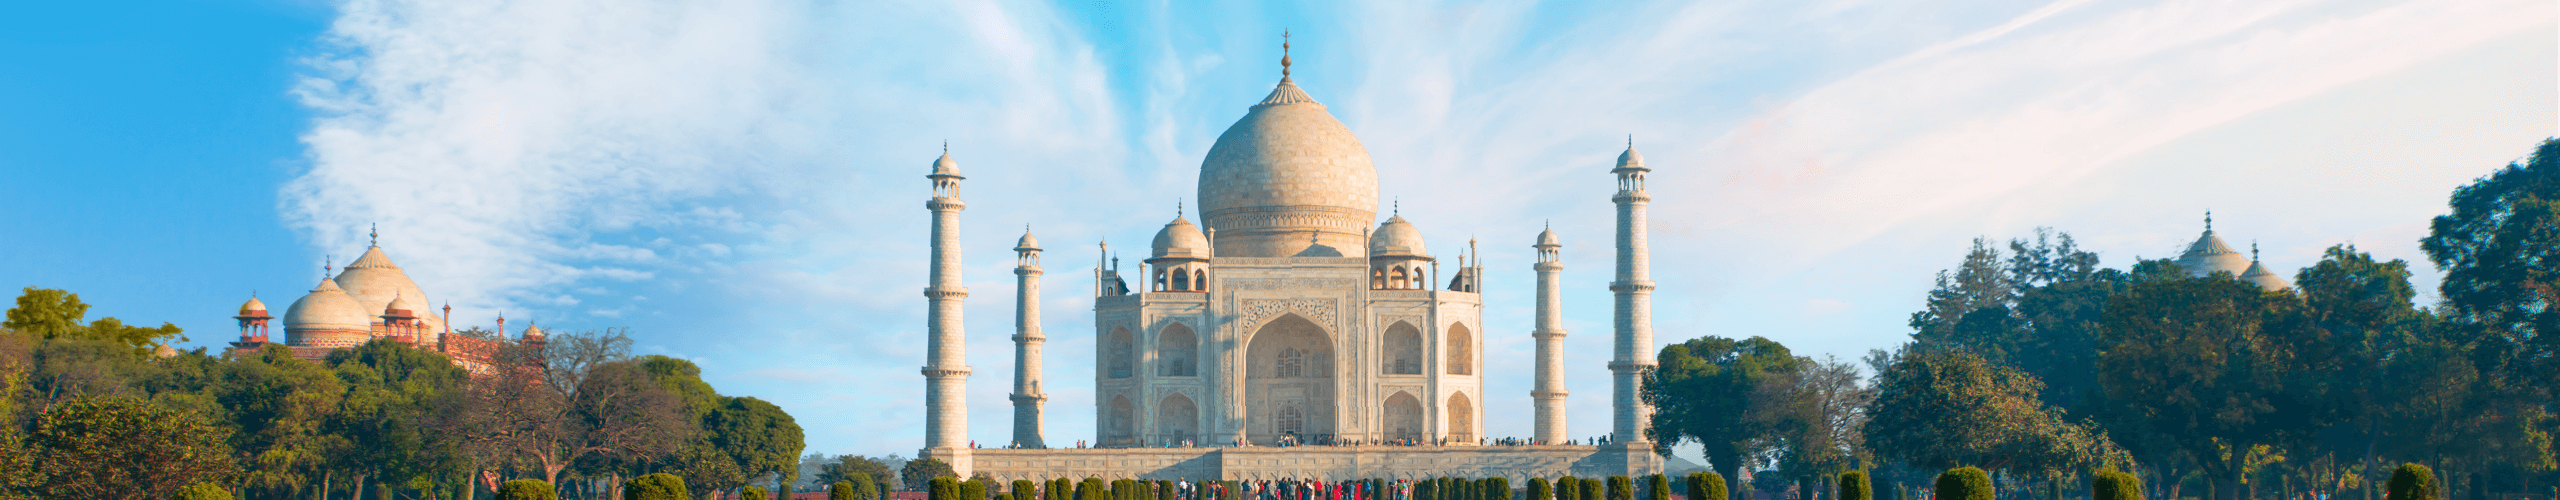 India Taj Mahal mausoleum in front of cloudy blue sky